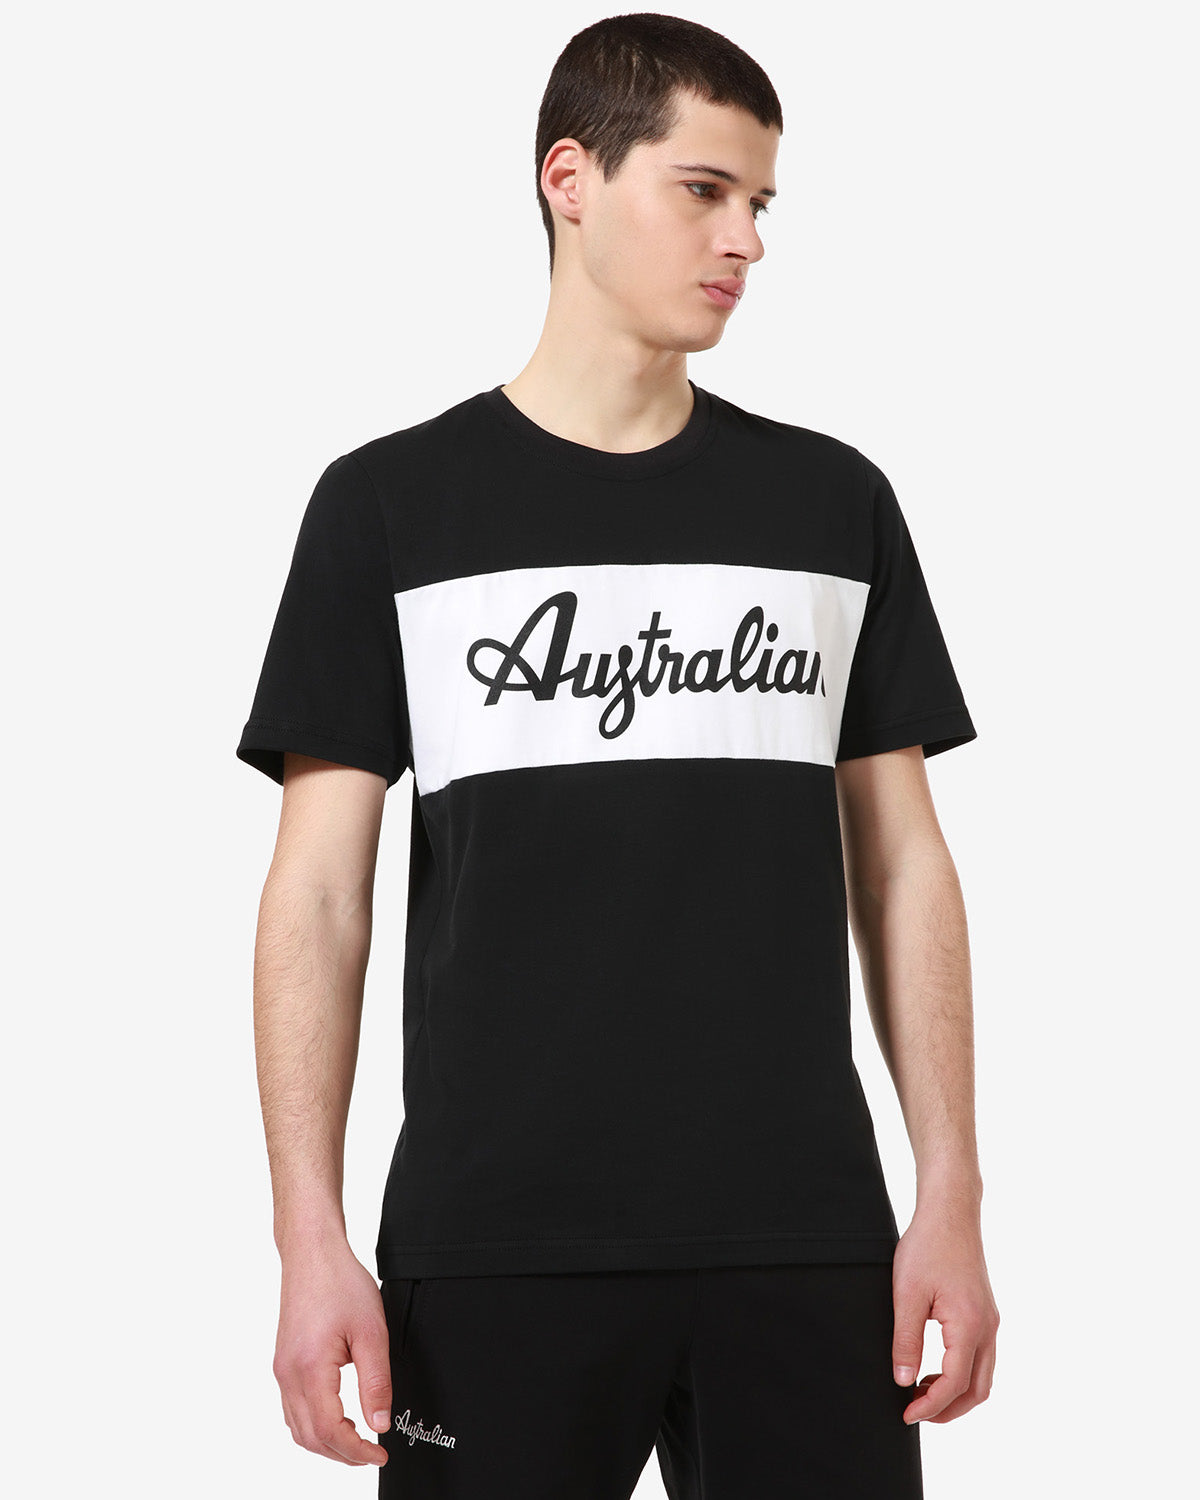 Australian T-shirt: T-Shirt | Australian | Sportswear Logo Brand